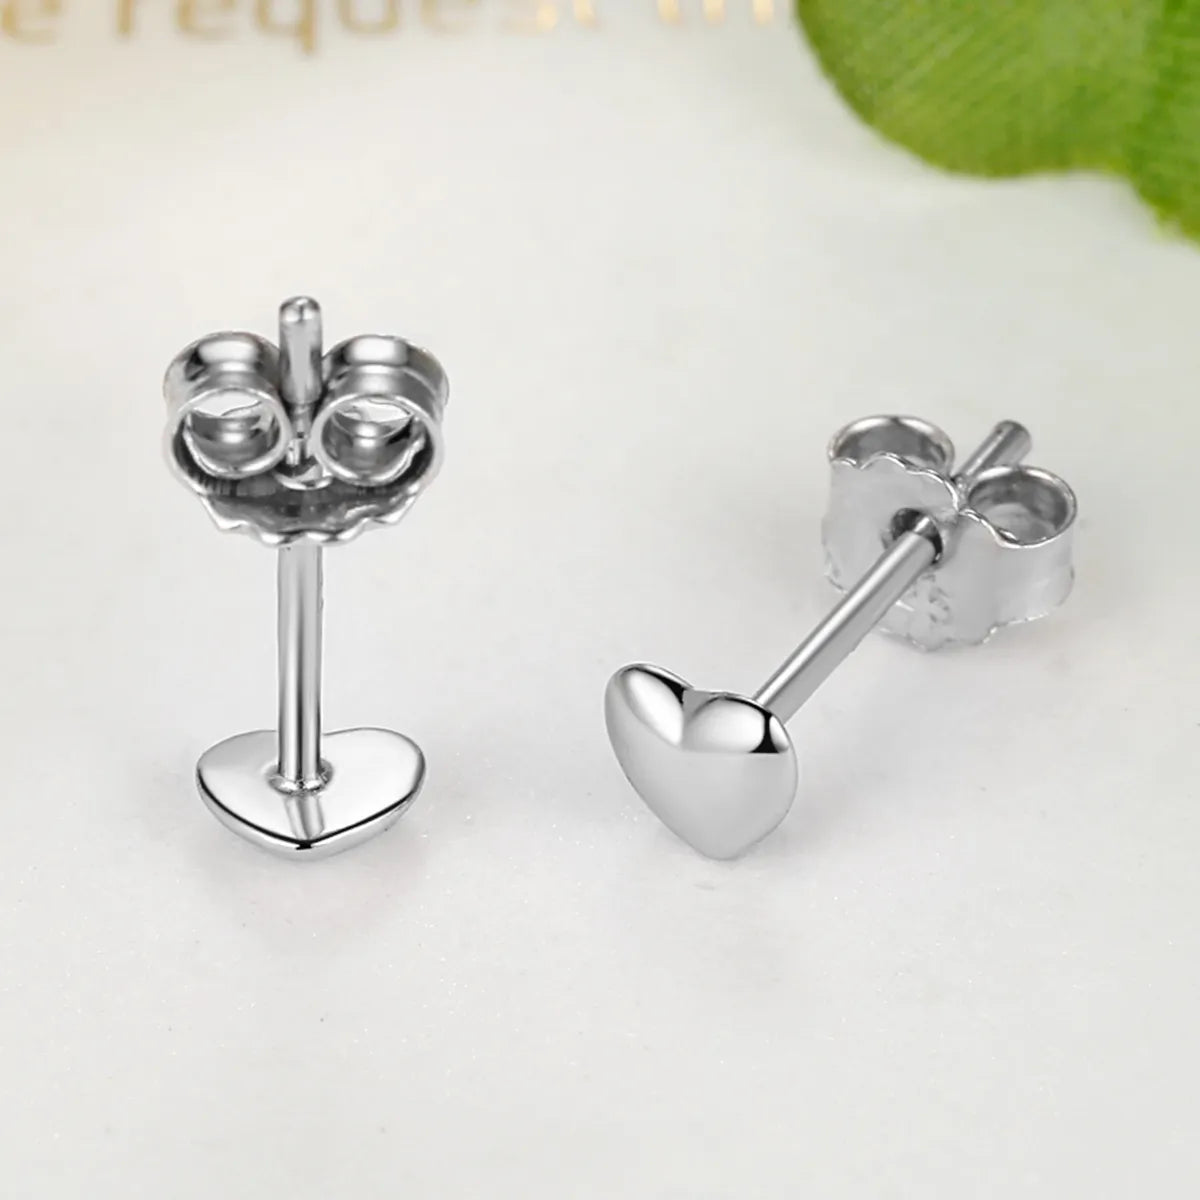 Elegance in Simplicity: 100% 925 Sterling Silver Plain Hearts Stud Earrings - Delicate Fine Jewelry for Girls, Kids, and Women!